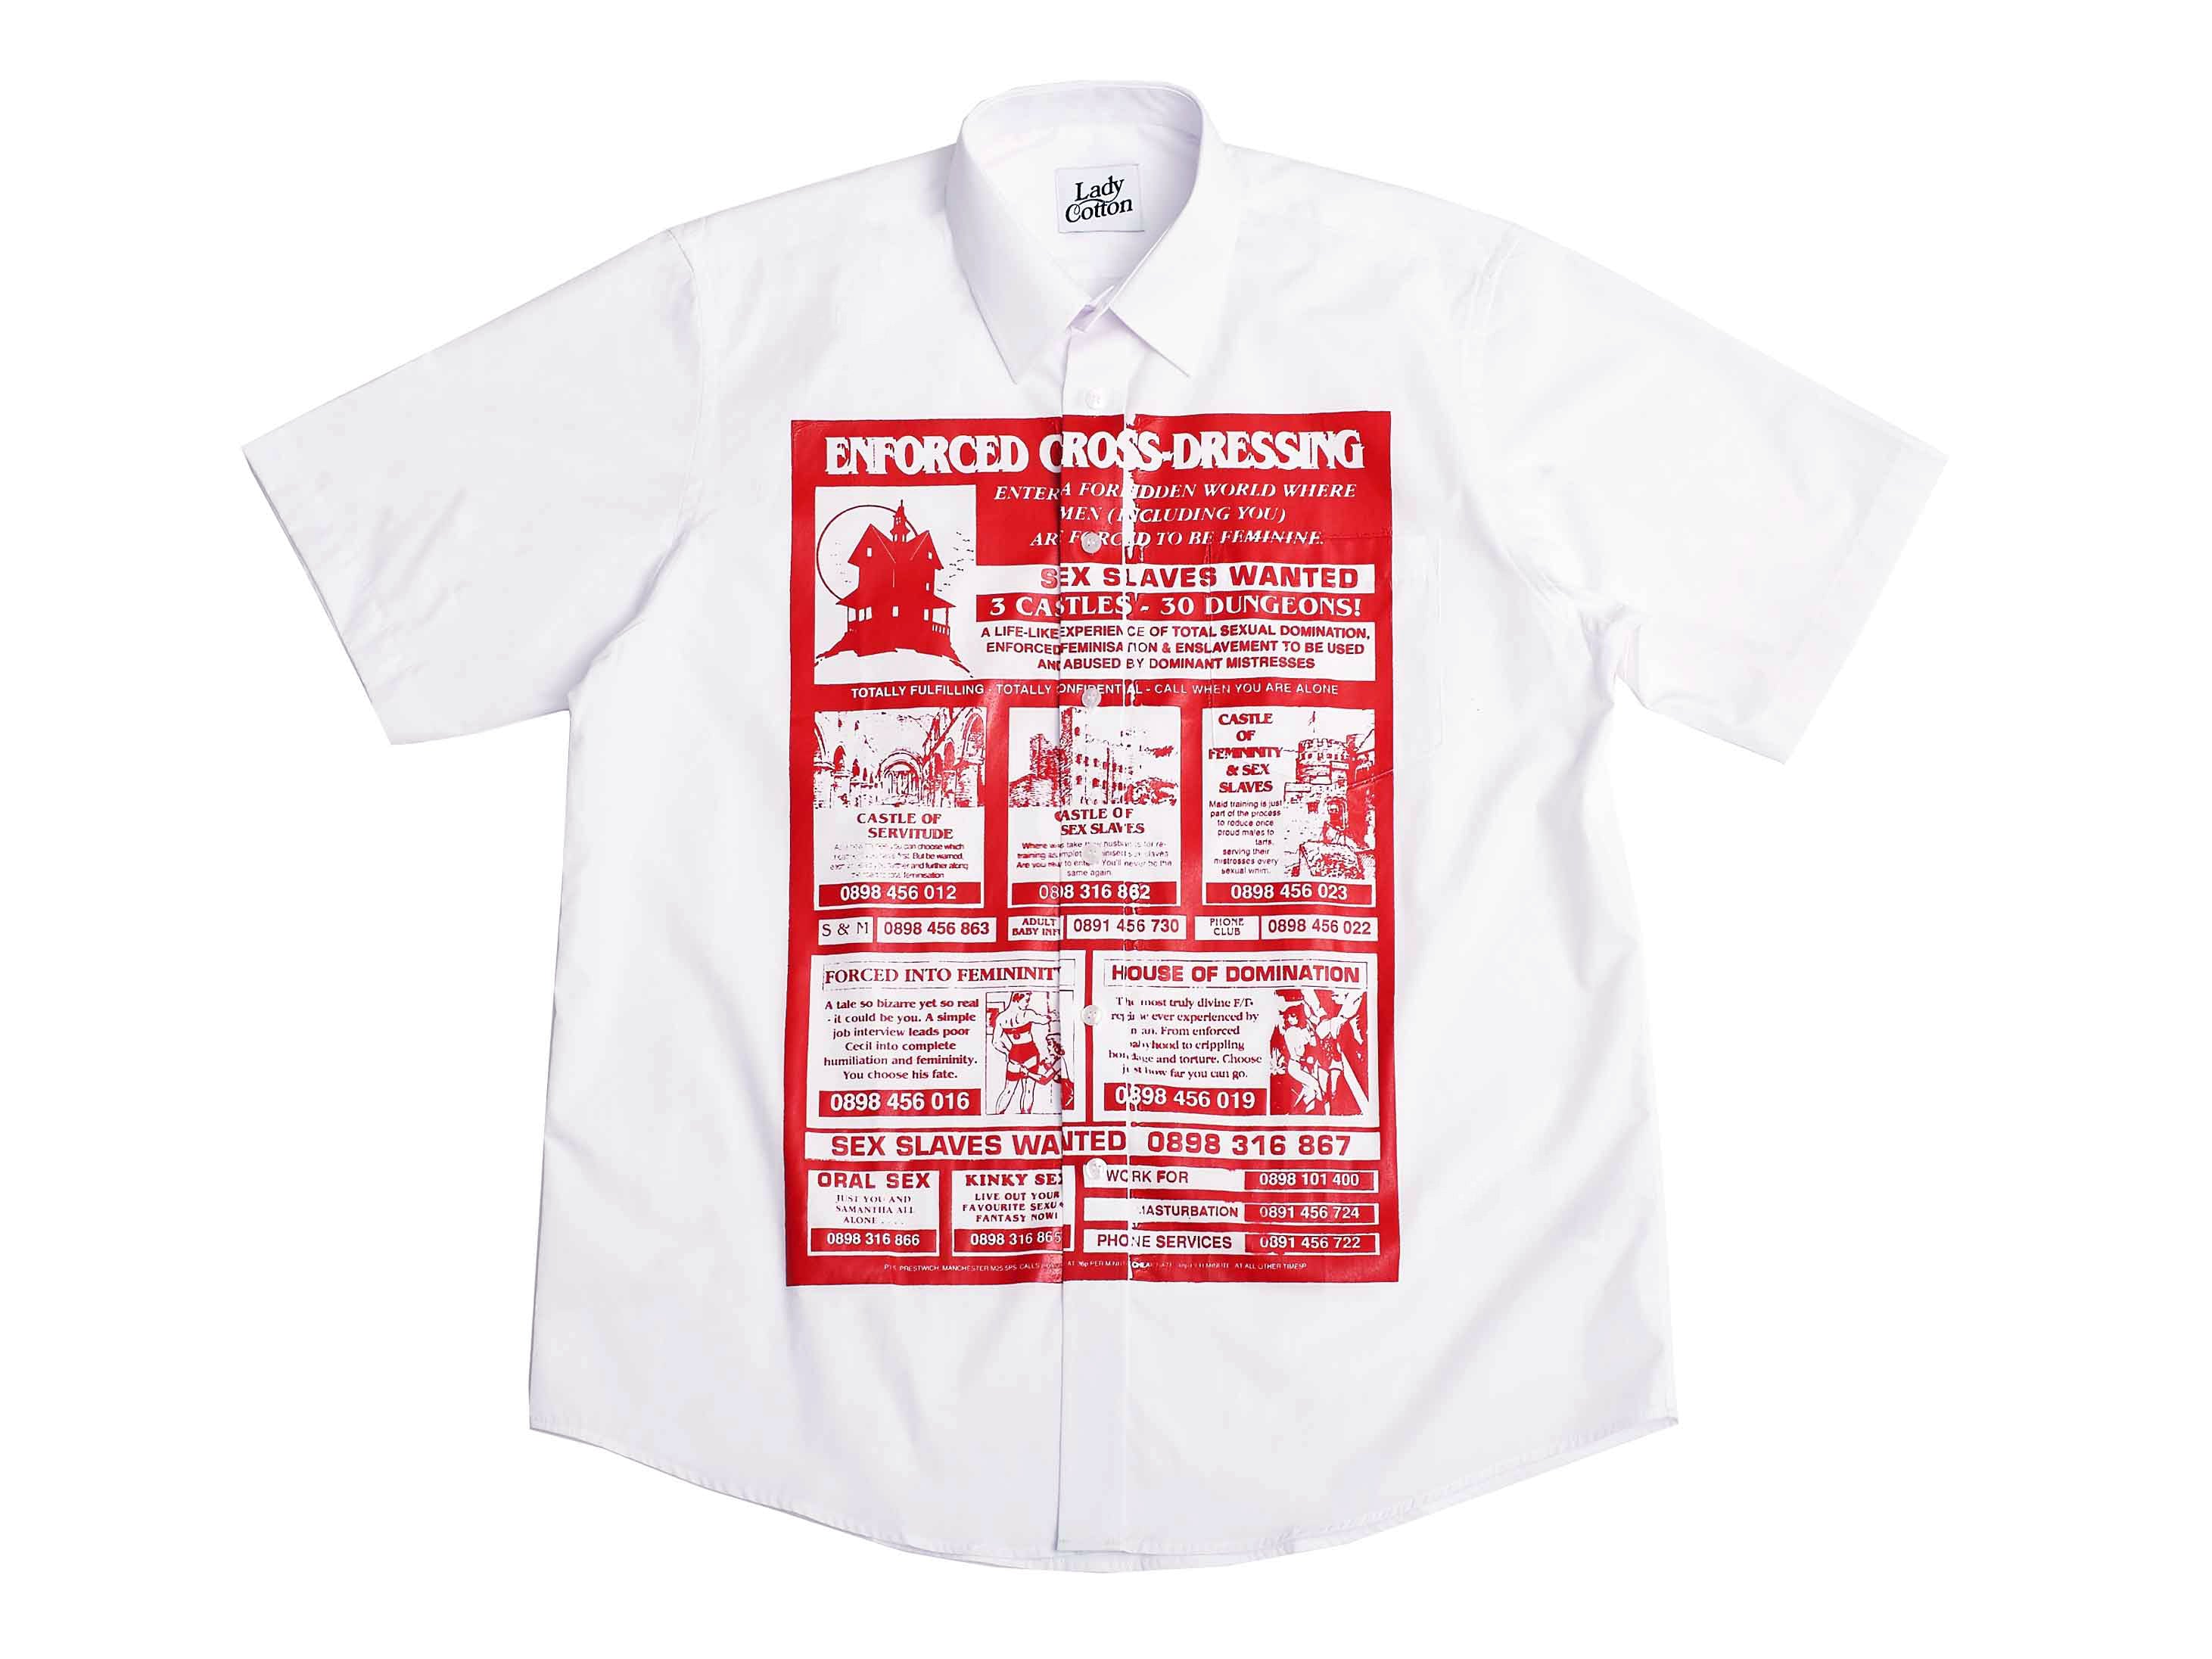 Short Ladycotton Shirt Enforced – Sleeve